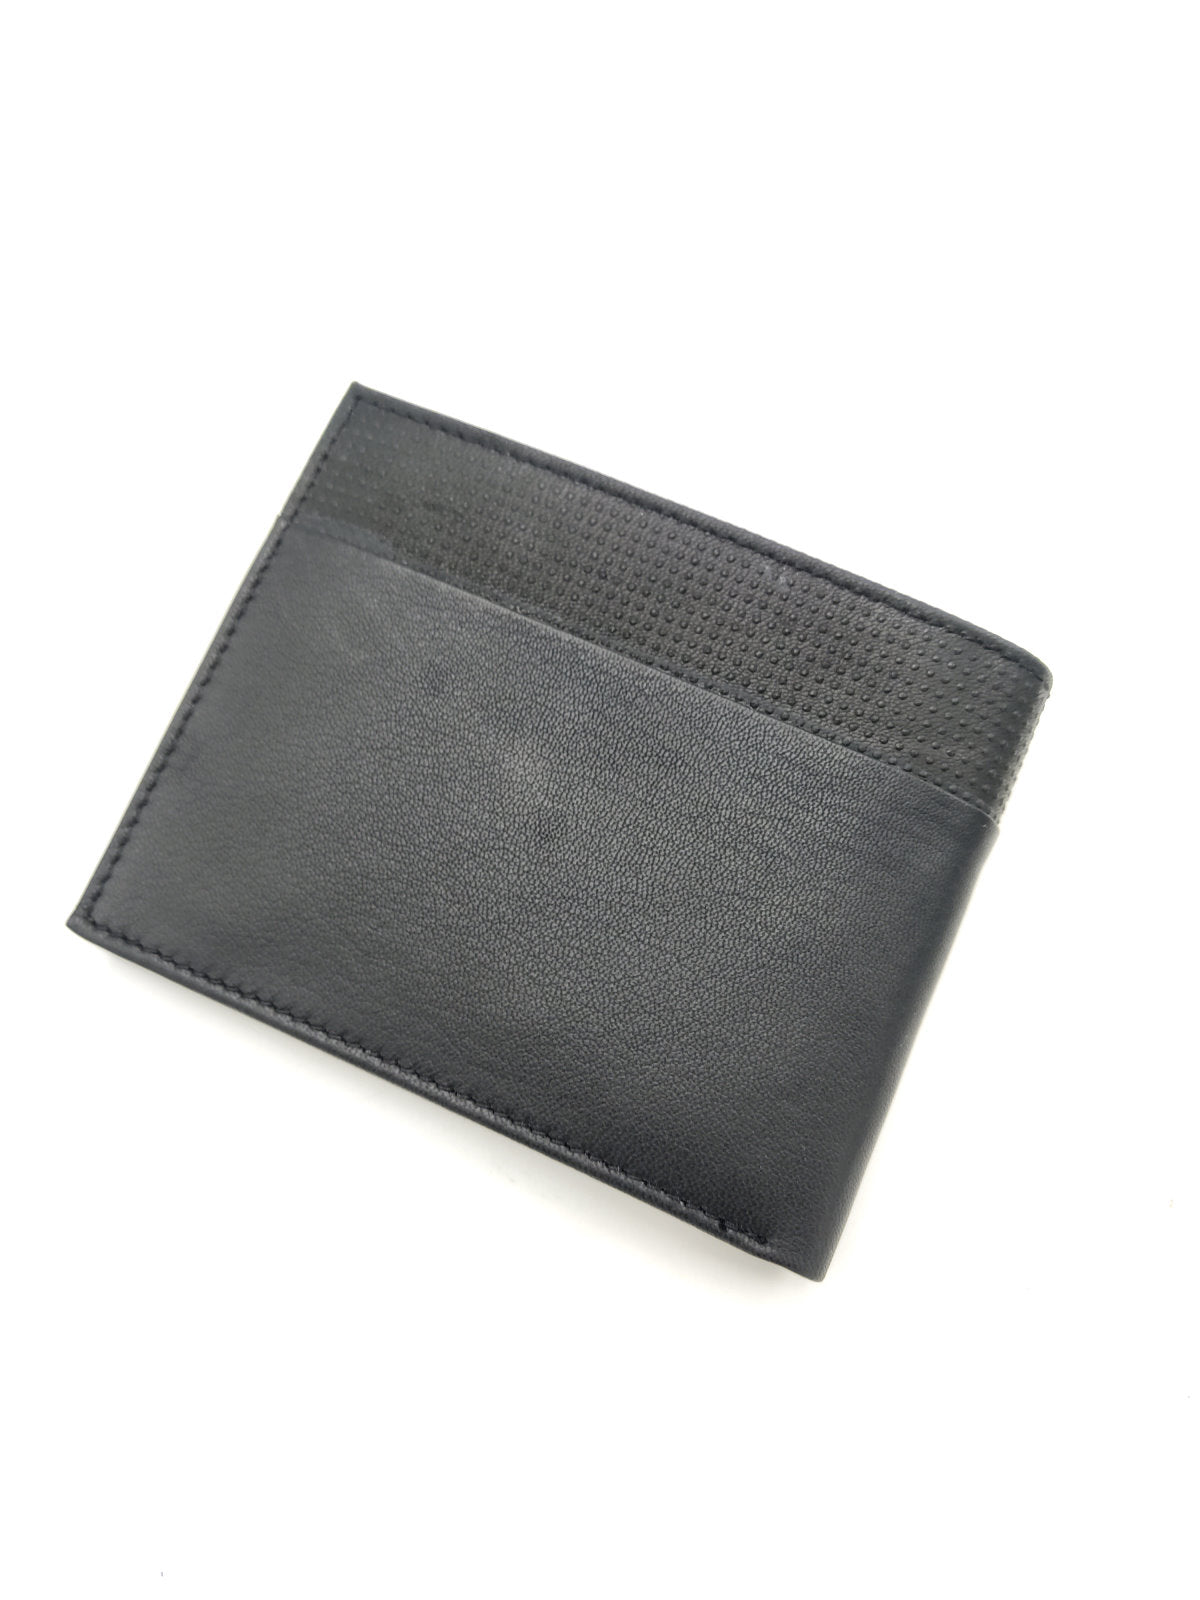 Gift box leather wallet + leather key holder, for men, brand Jaguar, art. D3056-35.062